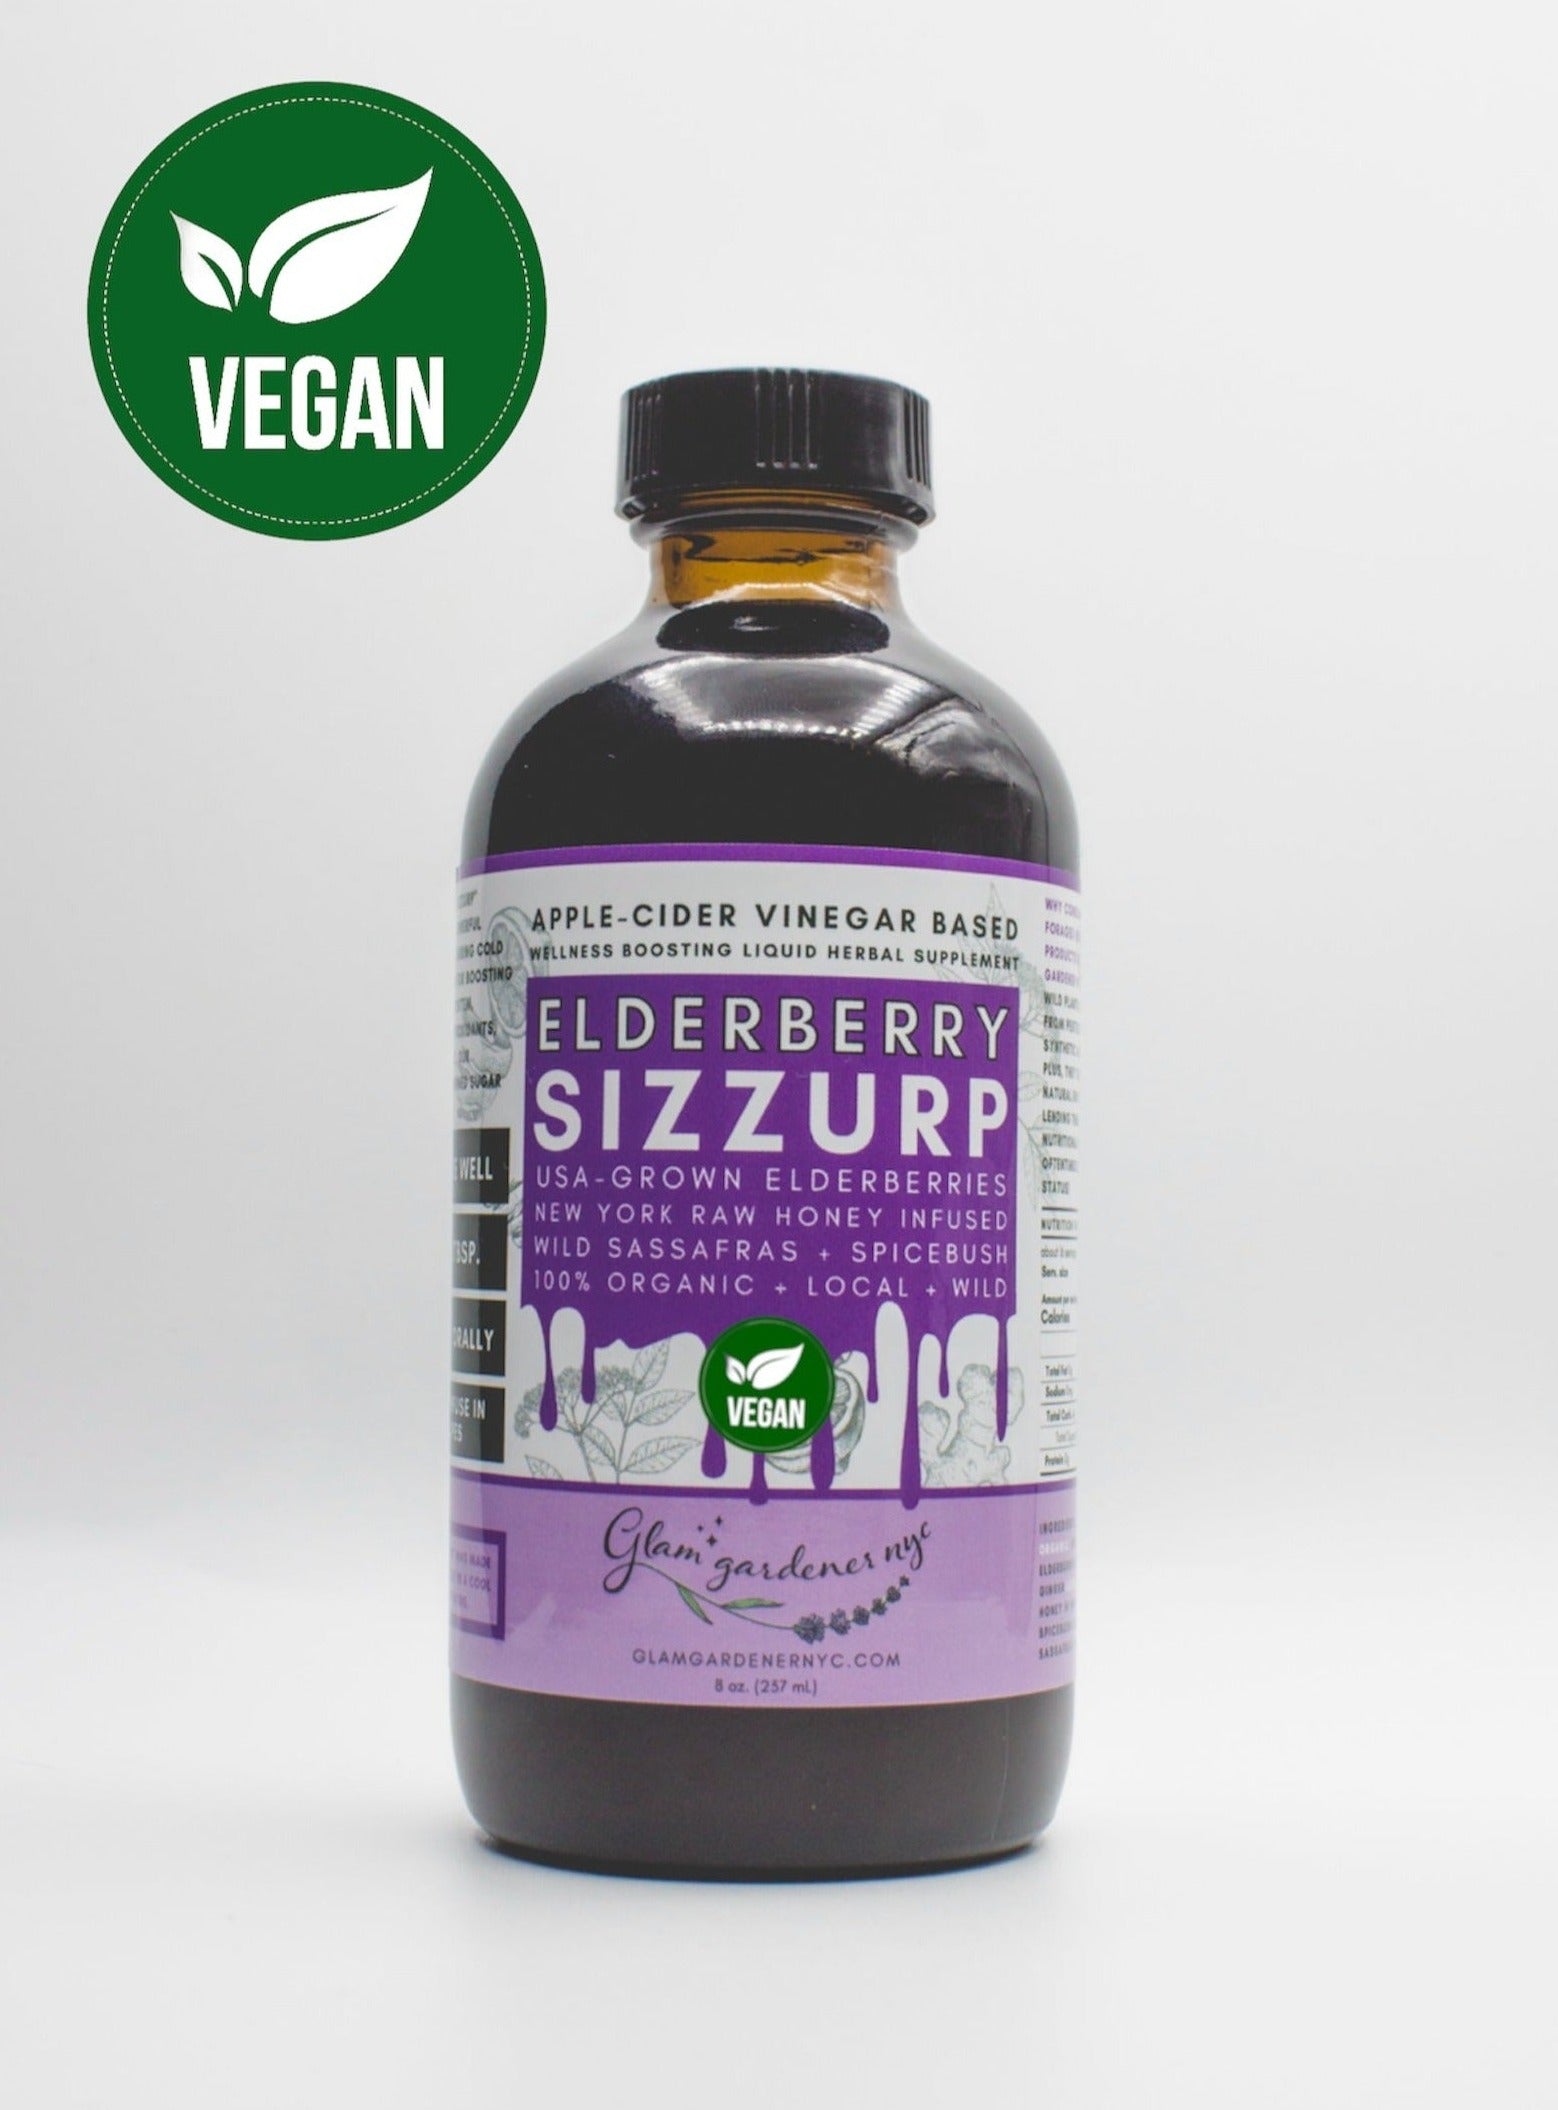 vegan elderberry sizzurp (syrup) by glam gardener nyc organic and wild plants new york state 